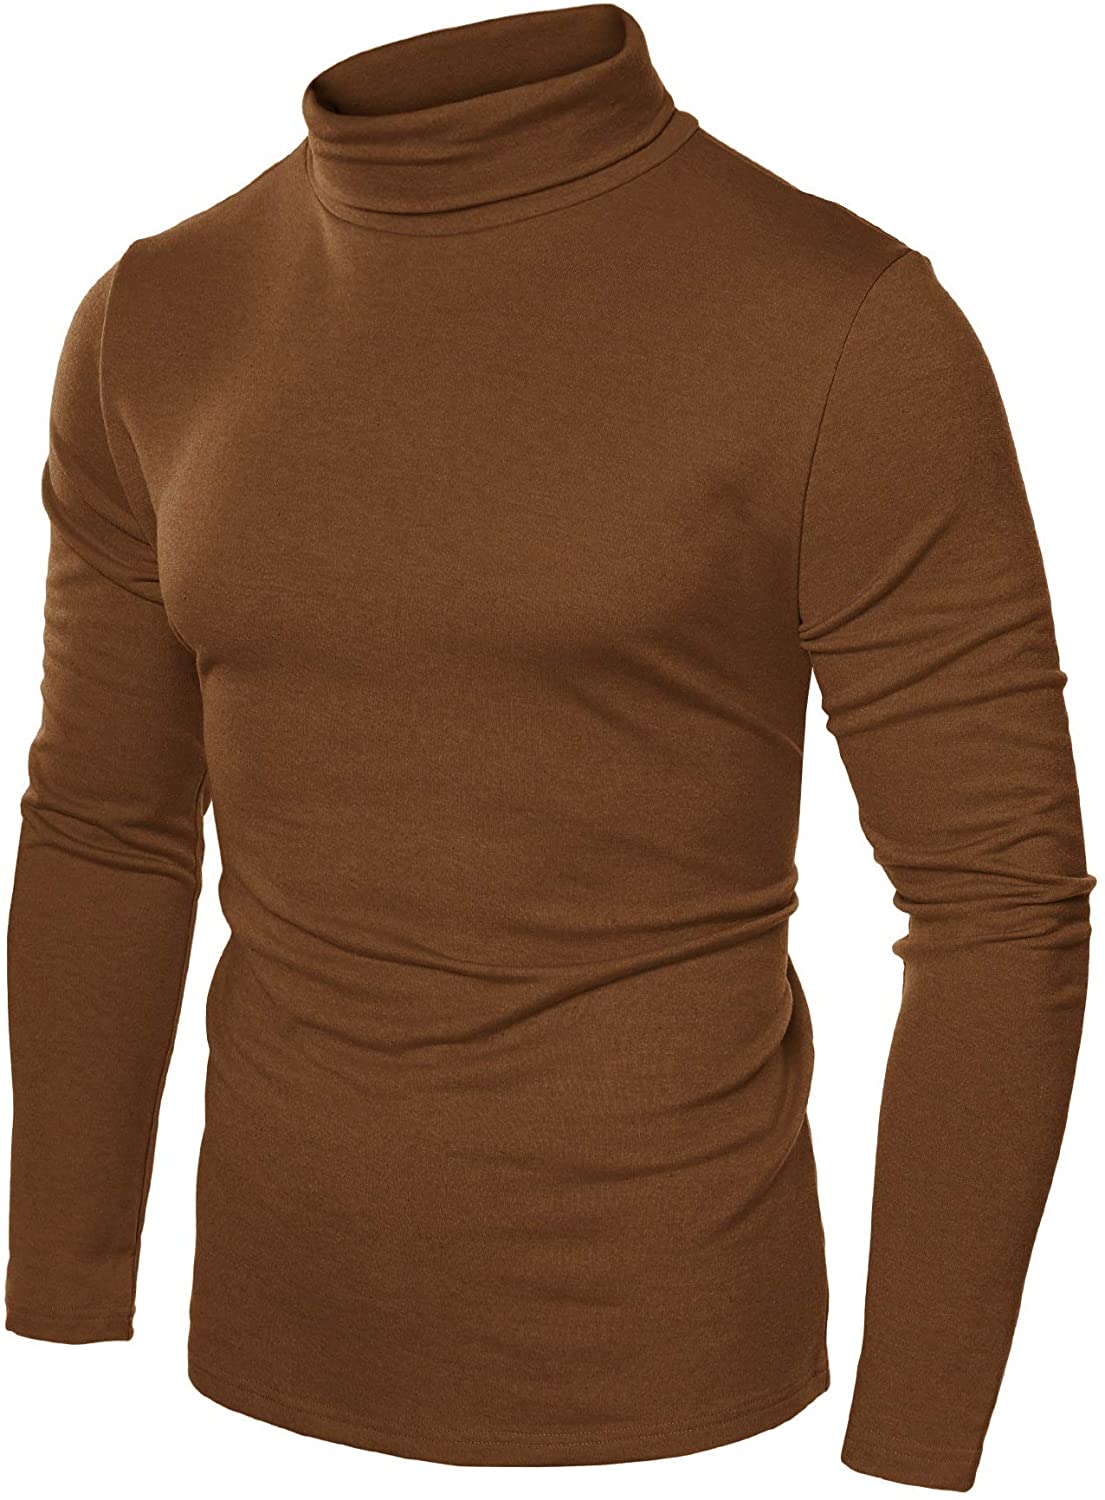 JINIDU Men's Slim Fit Turtleneck T Shirts Casual Cotton Thermal ...